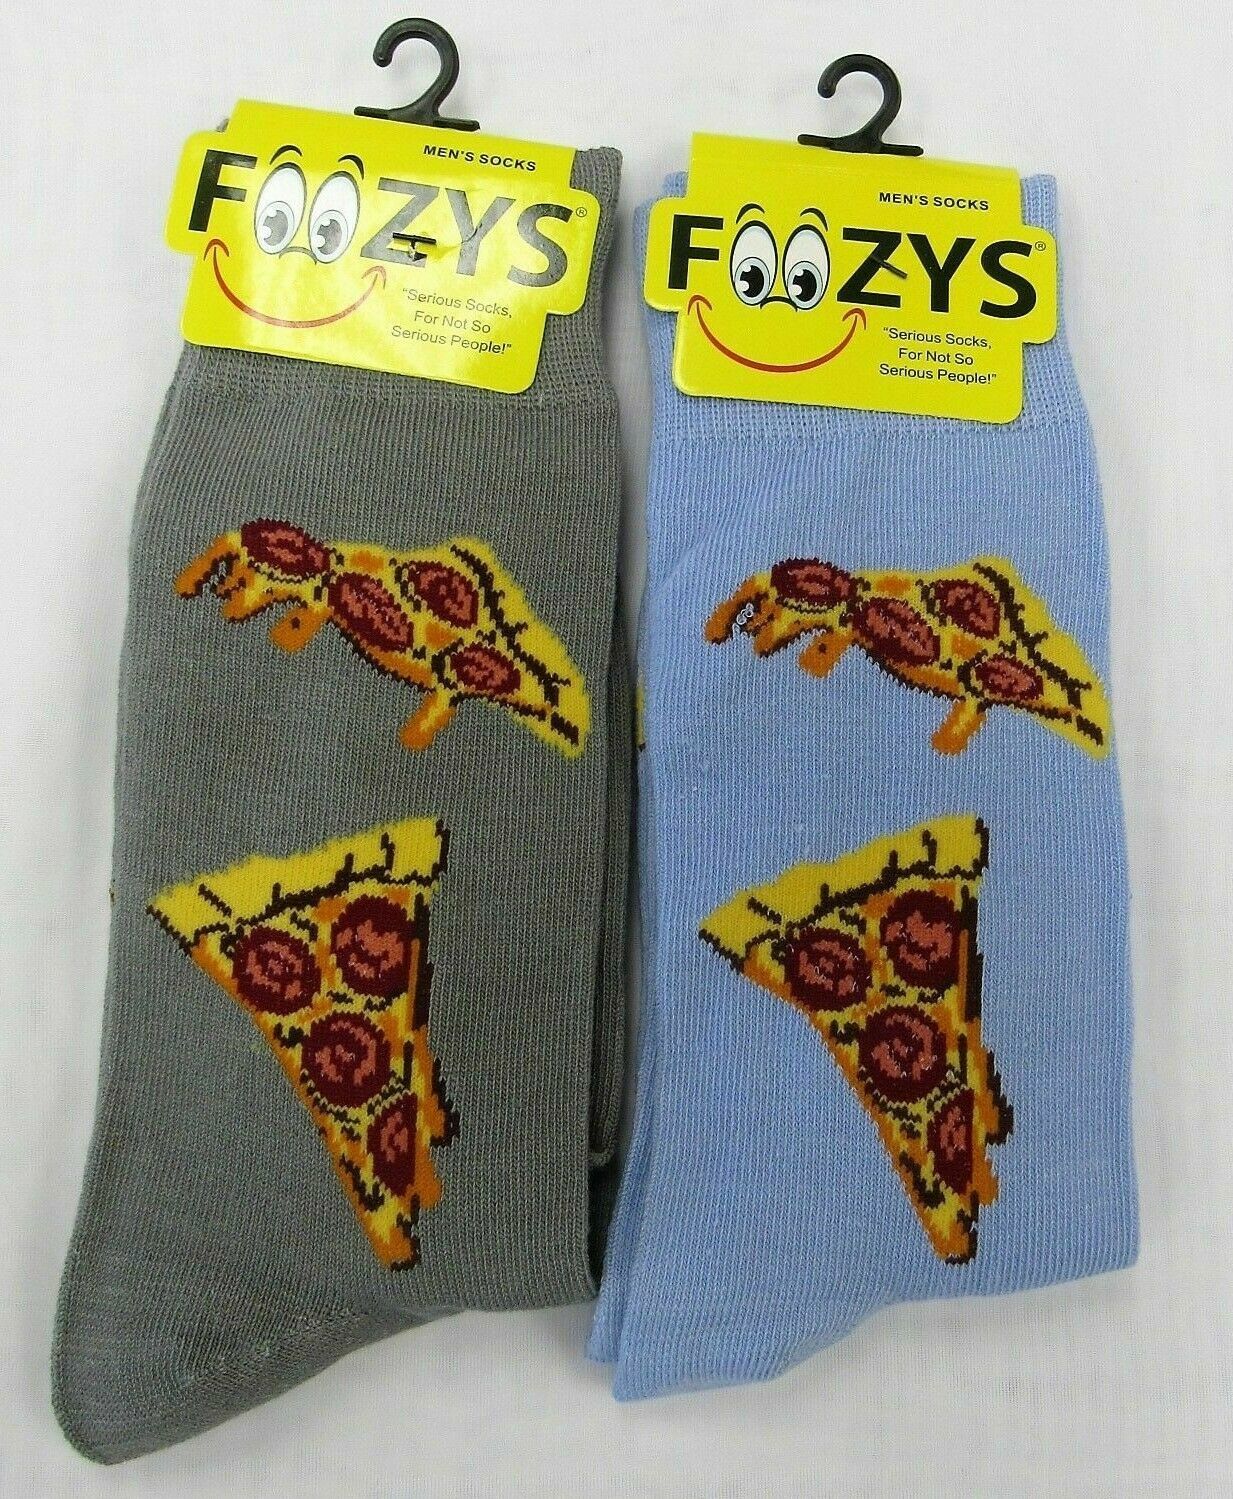 Pepperoni Pizza Slice Cheese Crust Dough Italian 2 Pairs Mens Foozys Fun Socks